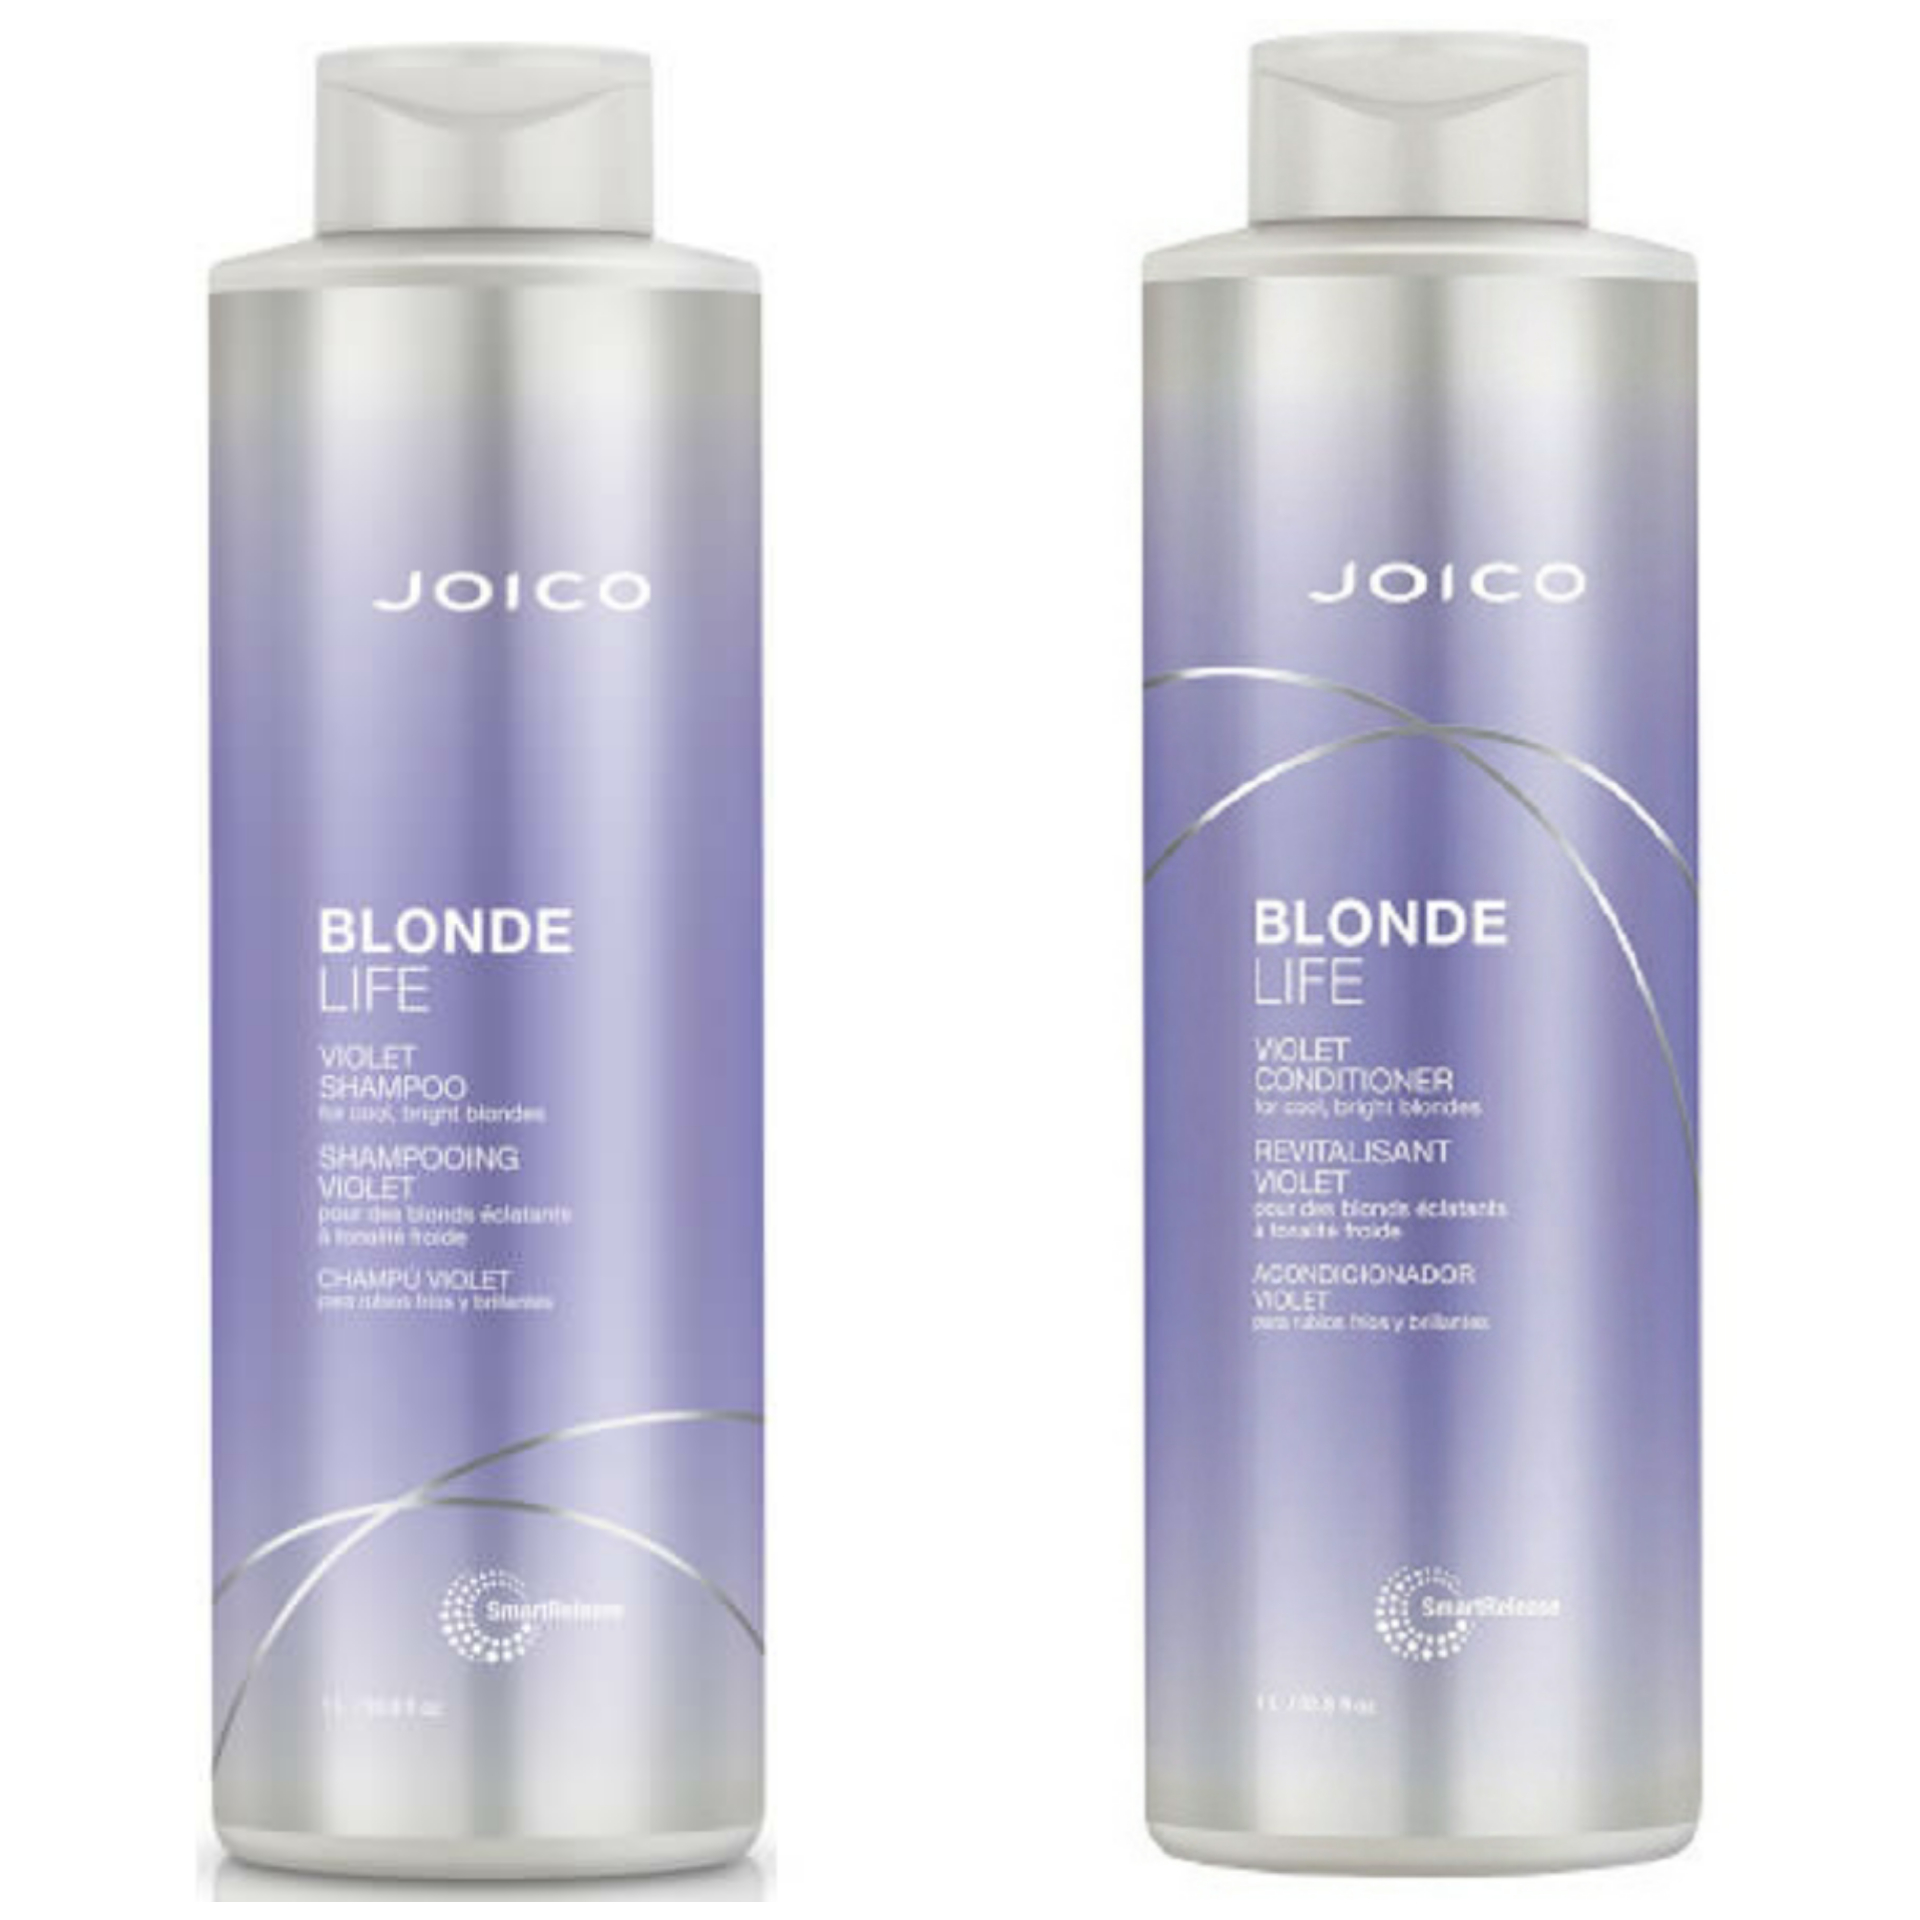 Joico Blonde Life Violet Shampoo 1 x 1l, Joico Blonde Life Violet Conditioner 1 x 1l